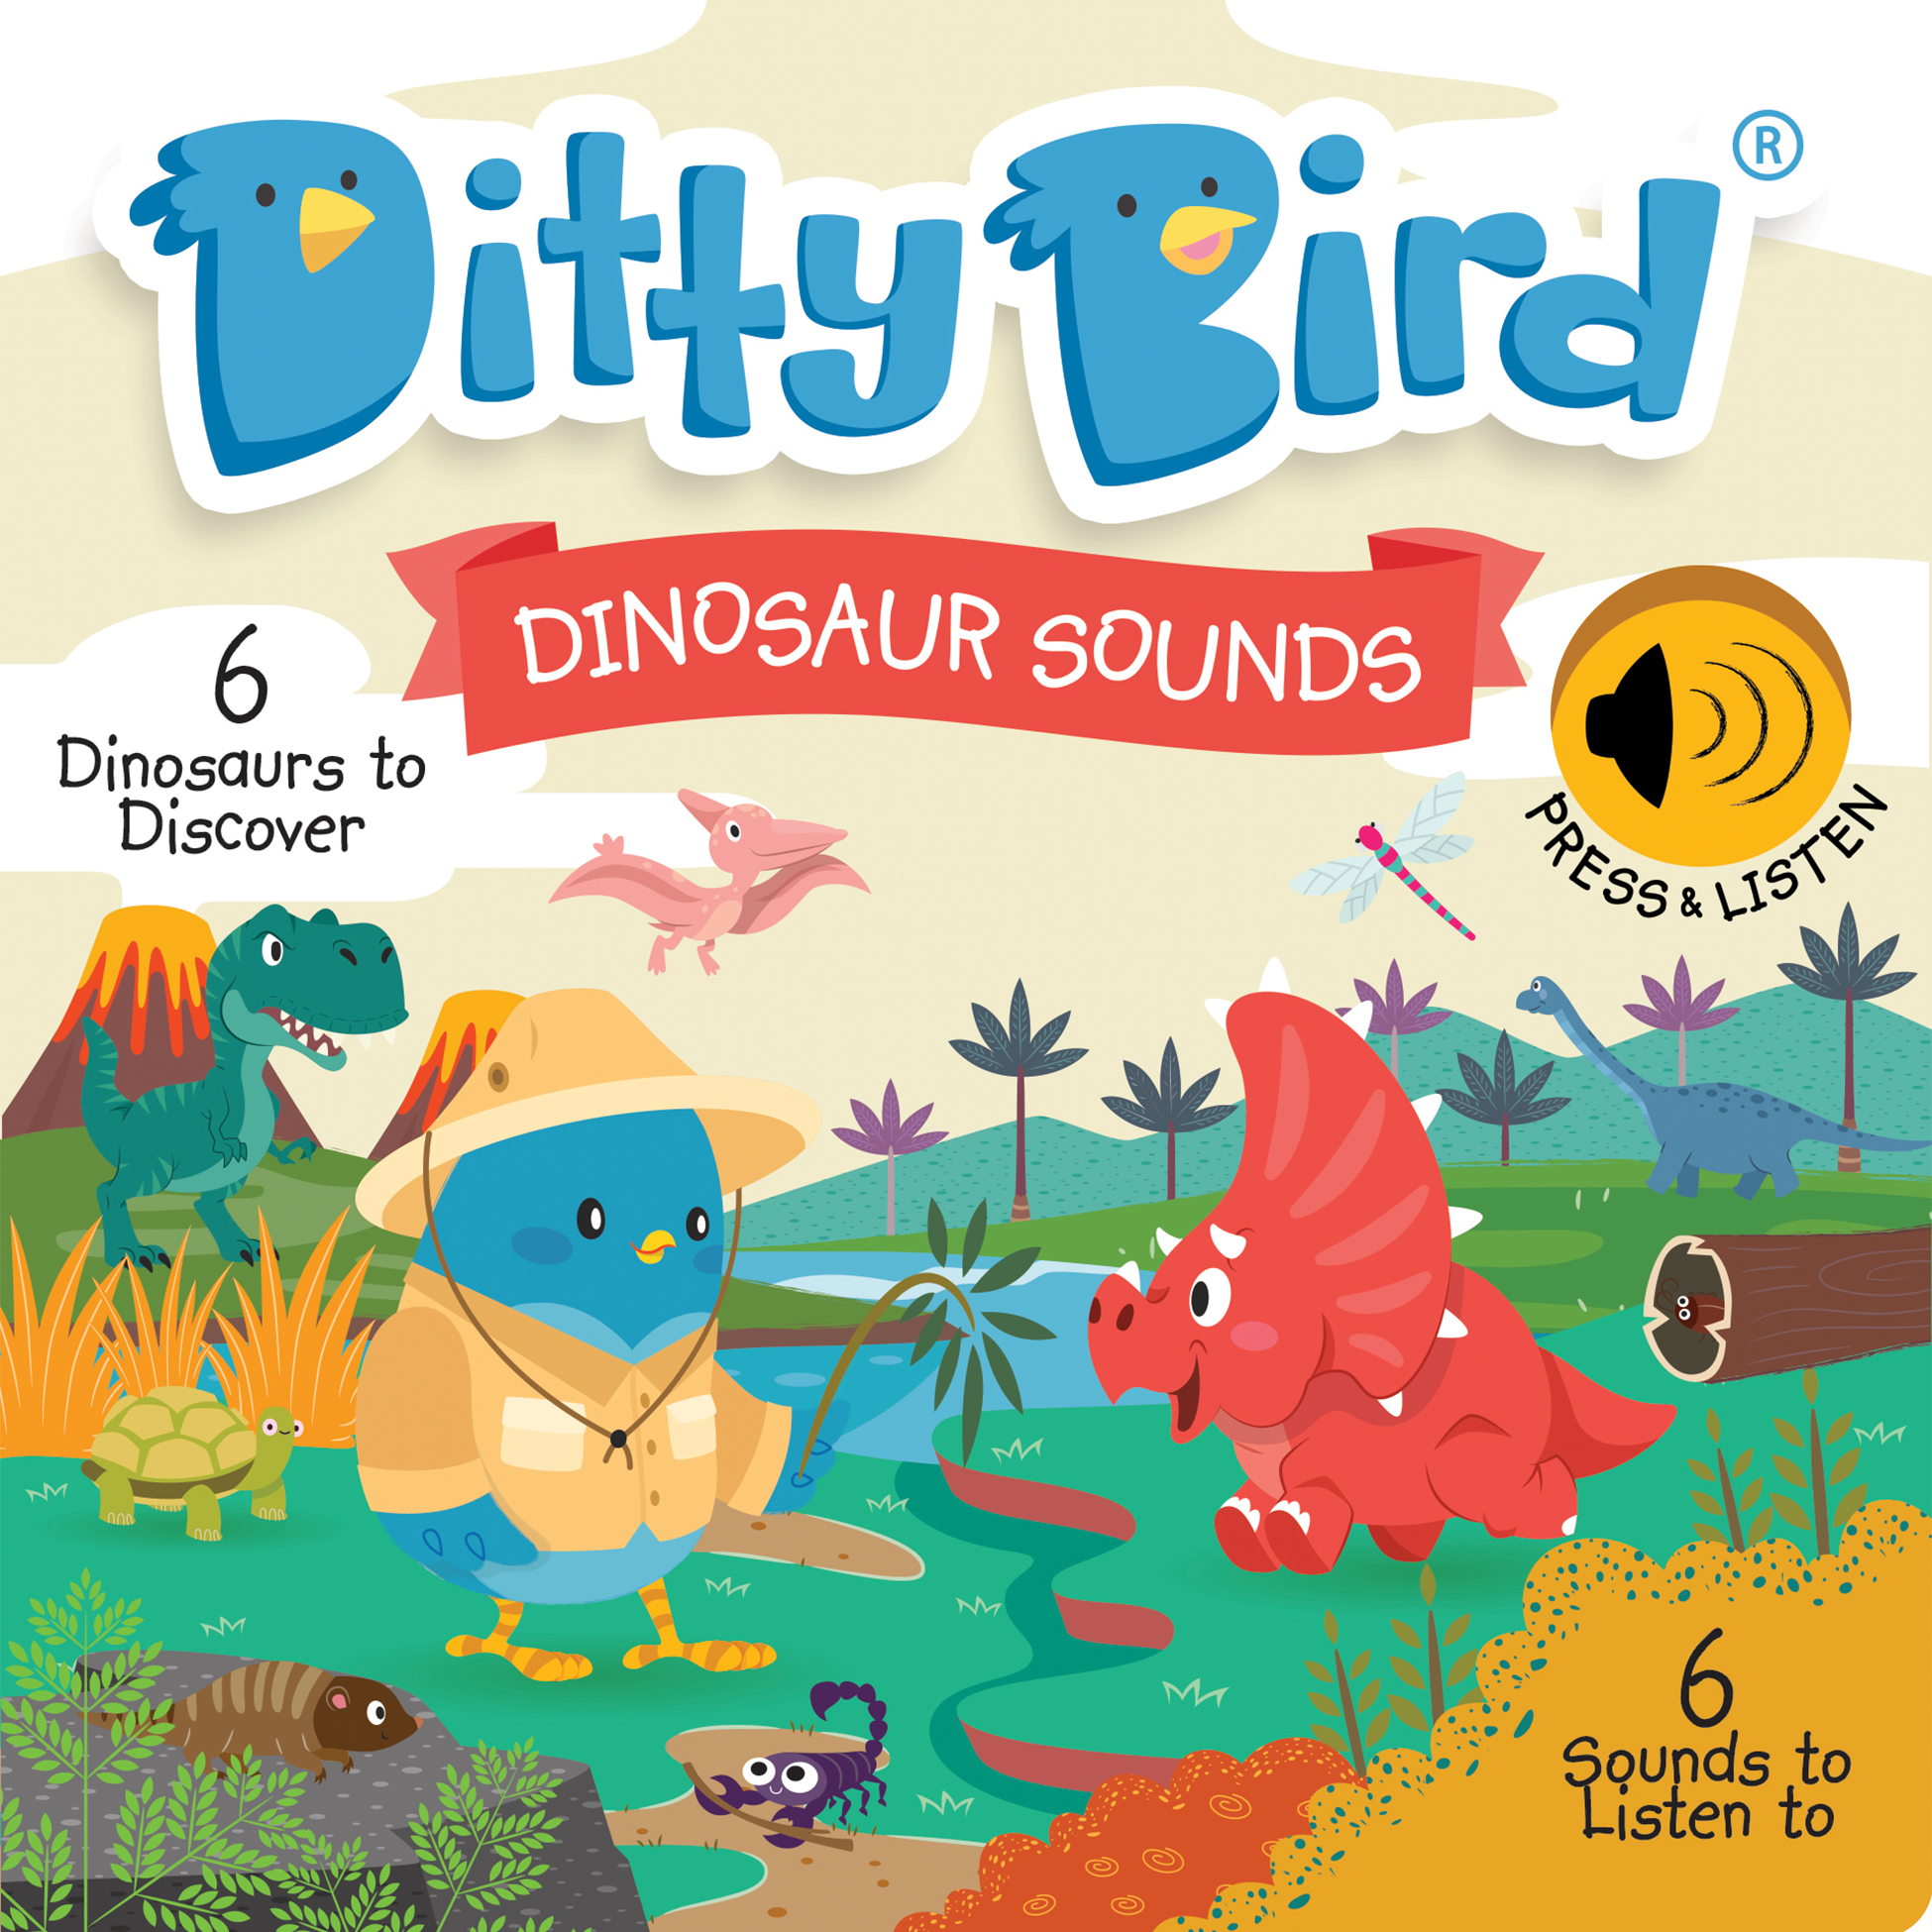 Ditty Bird - Dinosaur Sounds - HoneyBug 